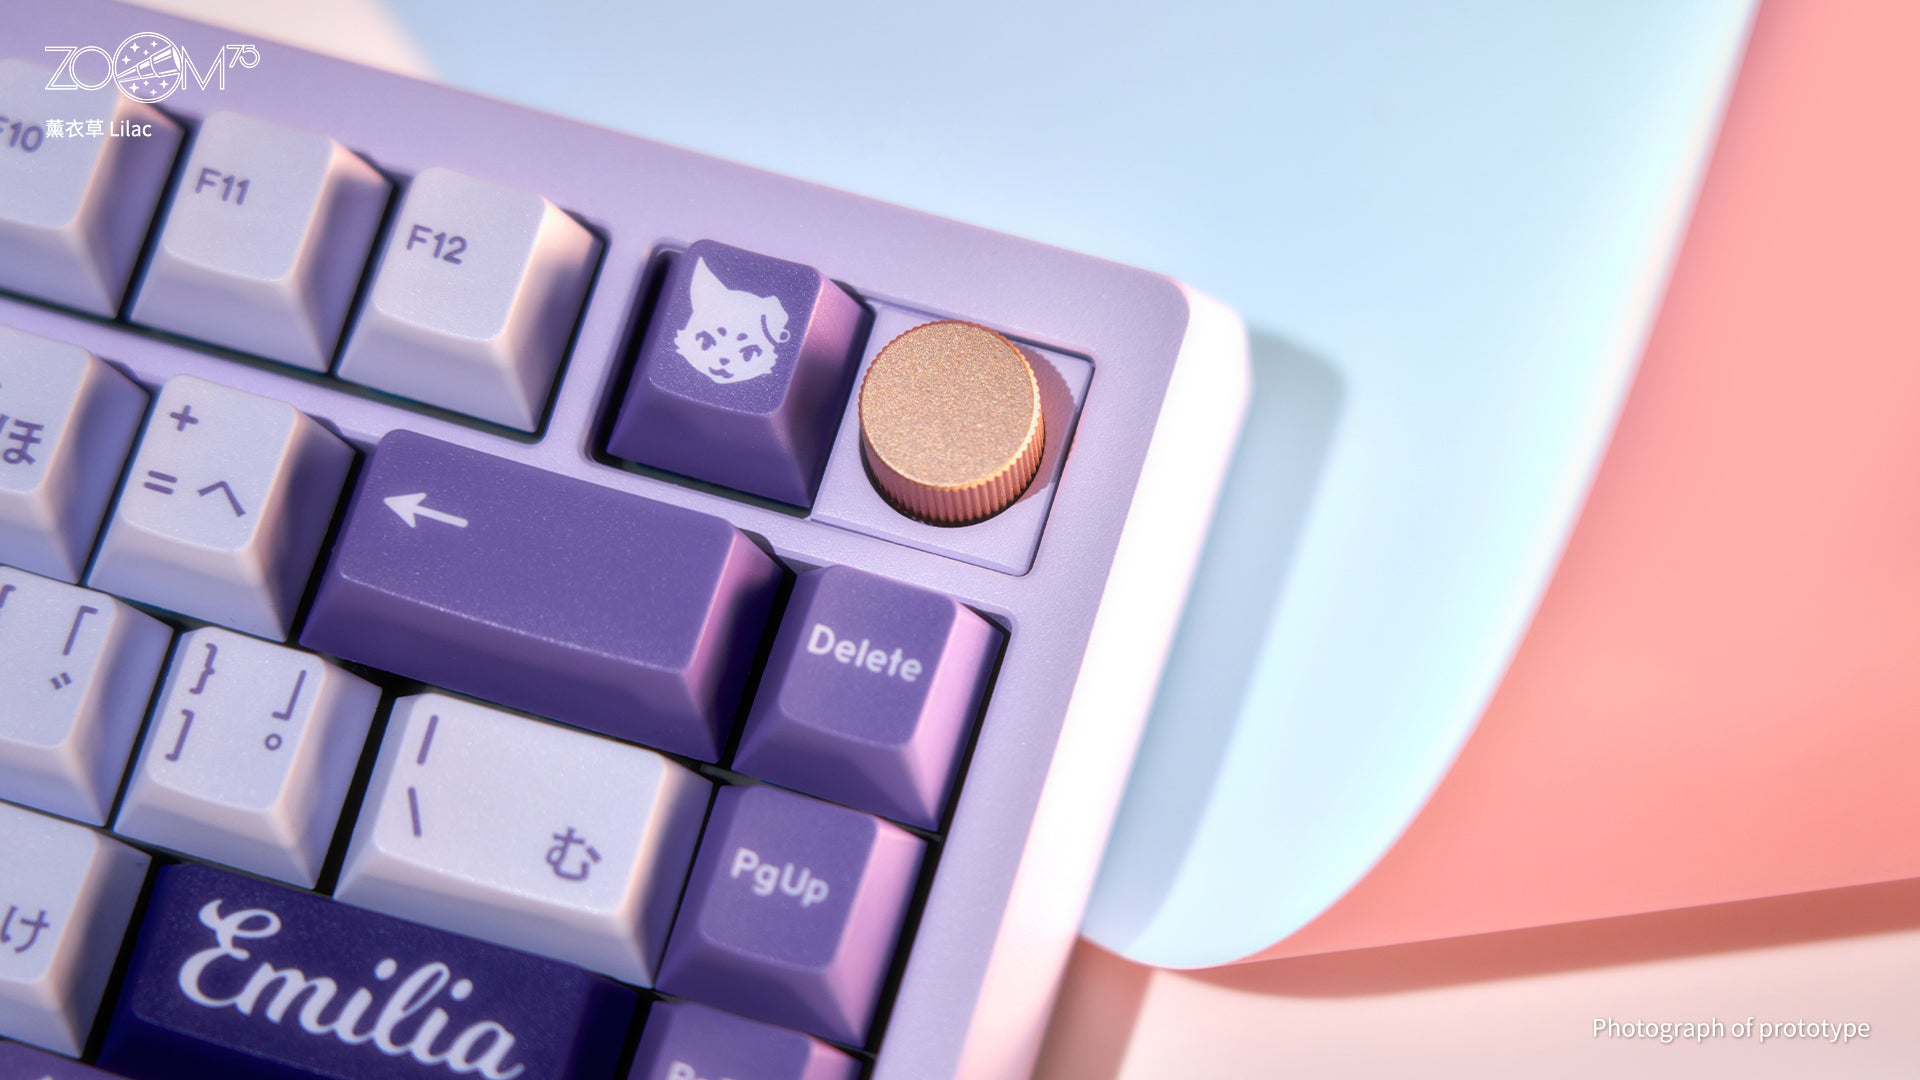 Zoom75 EE Keyboard - Lilac [Preorder]